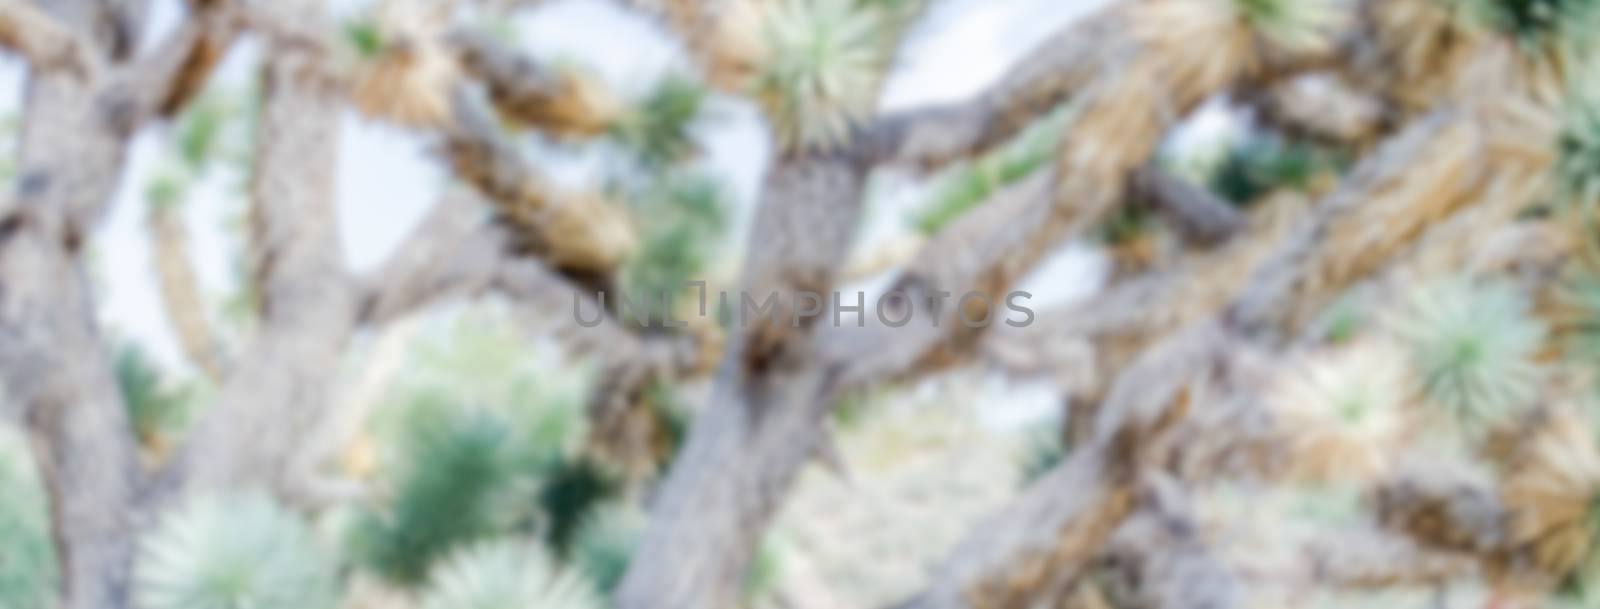 Defocused background of Joshua Trees in Arizona by marcorubino